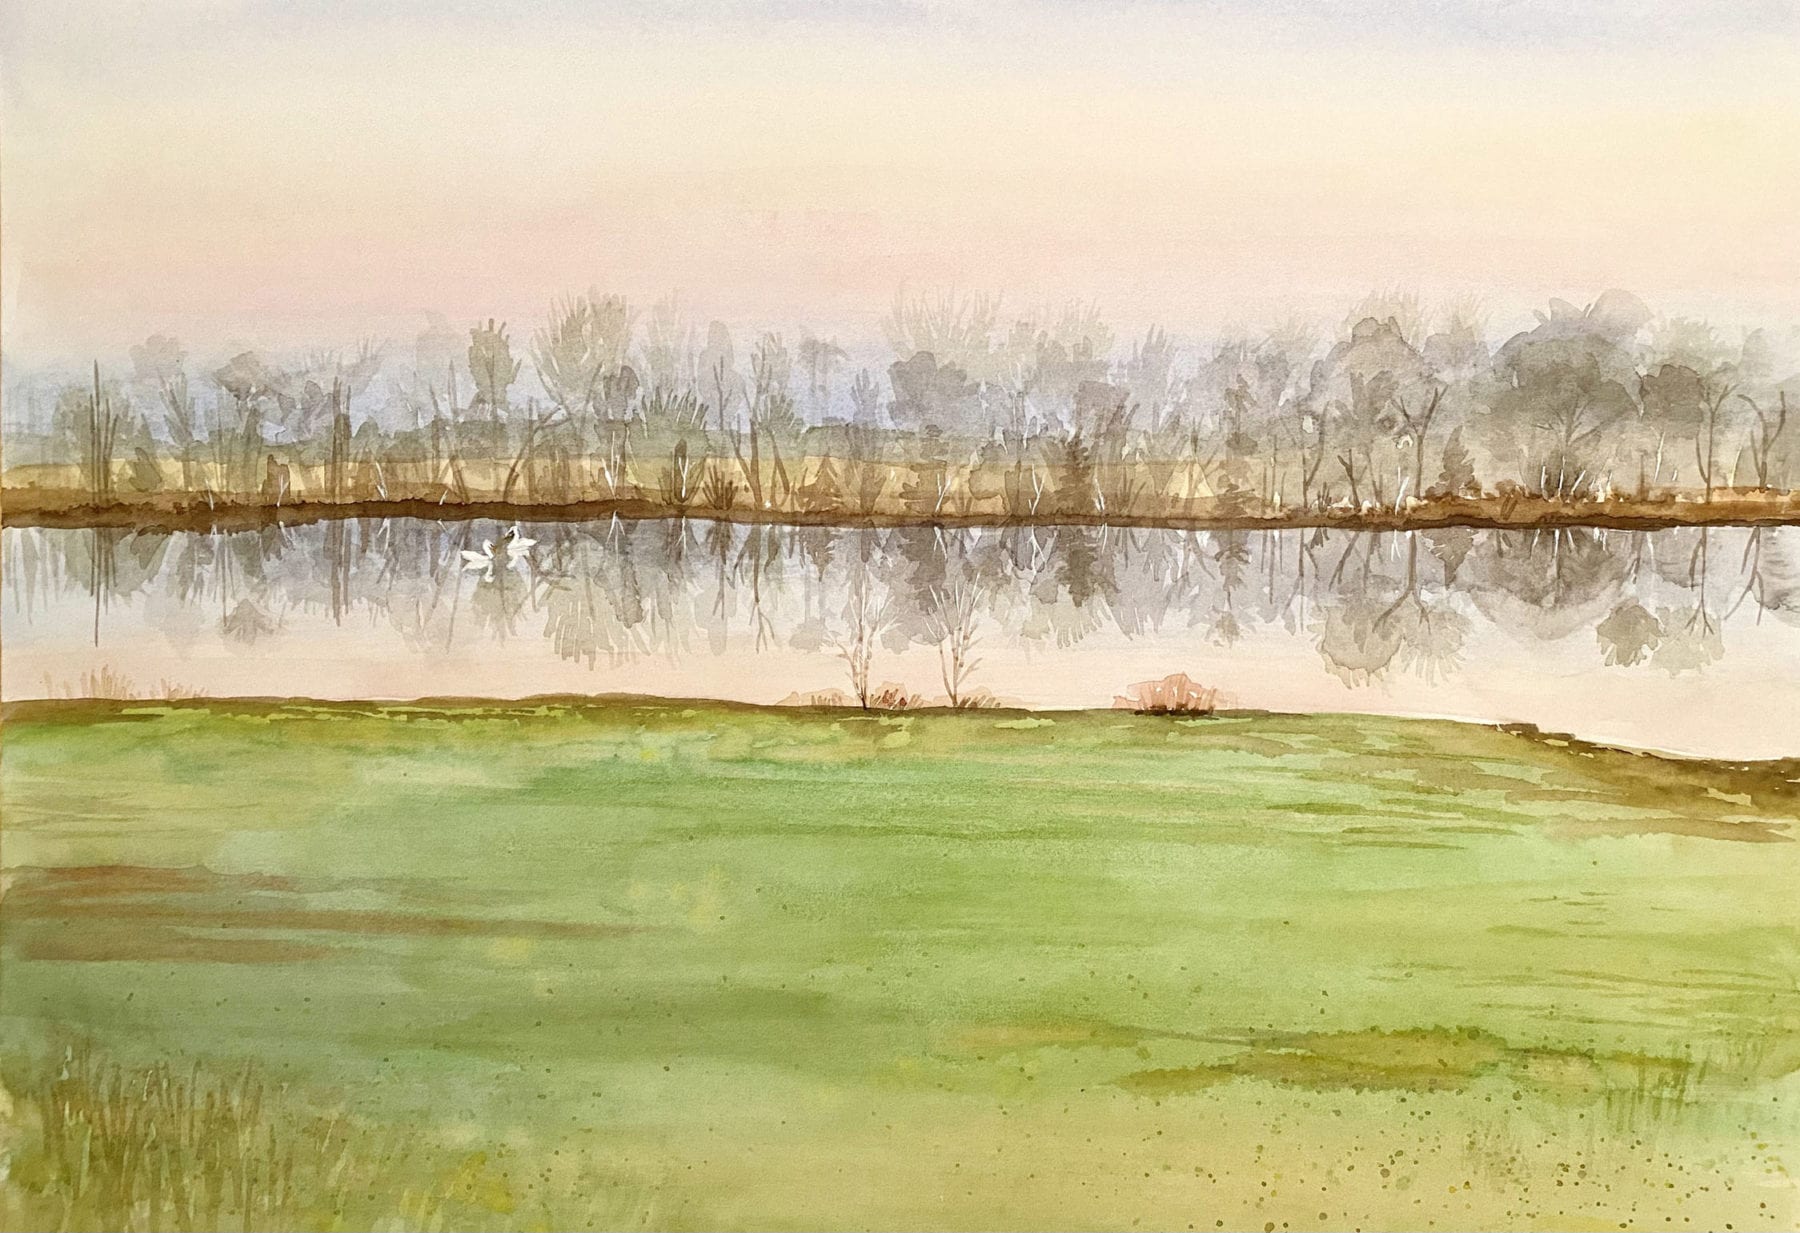 Margaret Simpson, Dam Site 21 at Dusk, watercolor, 14 x 20